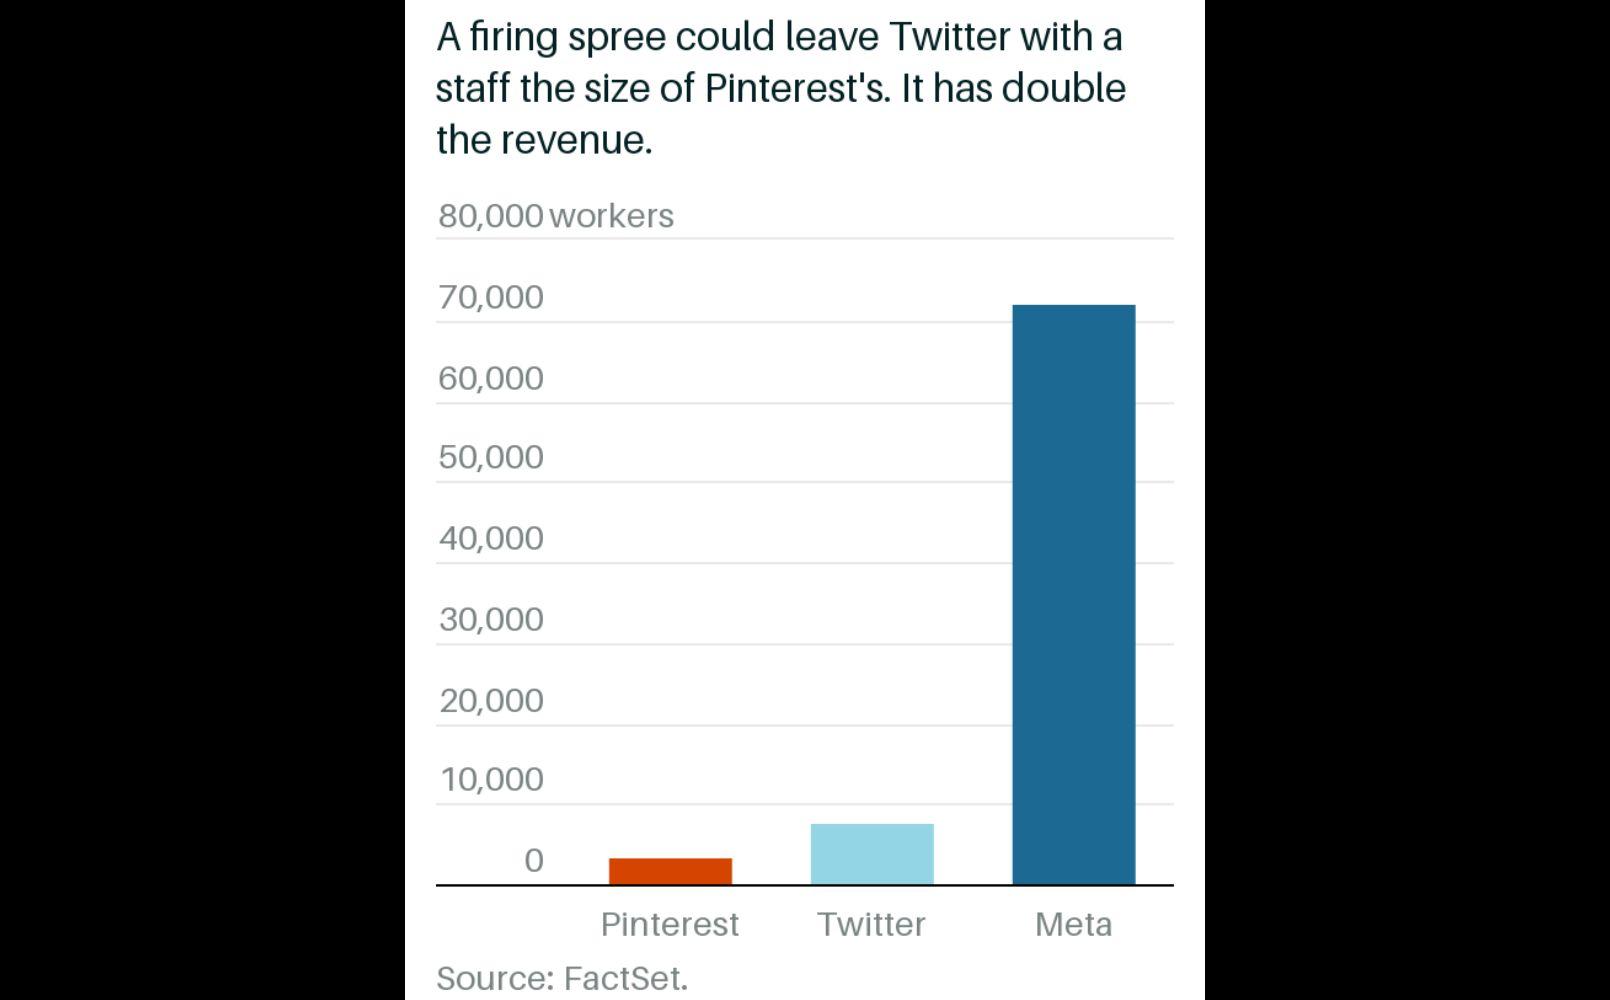 Twitter workforce size